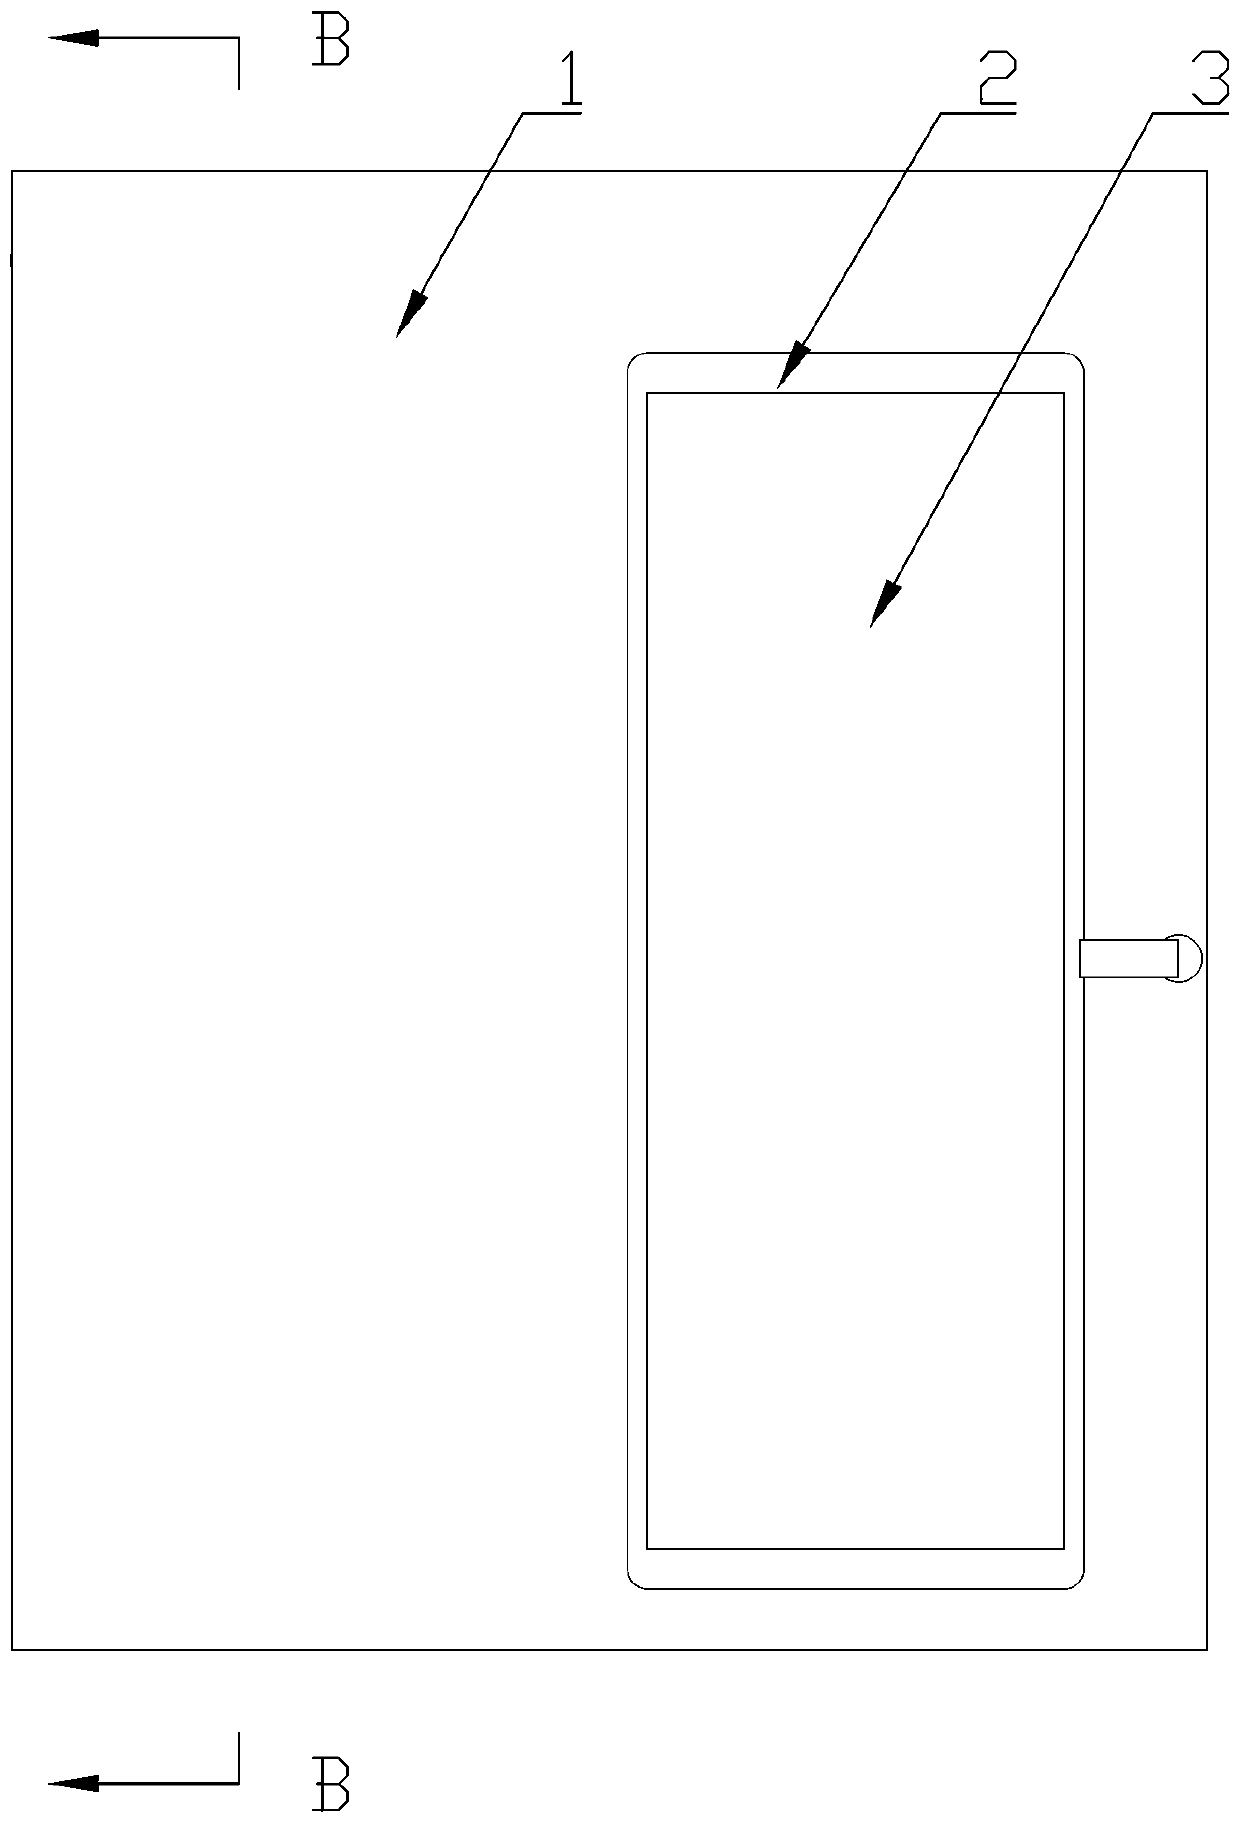 Anti-thermal-radiation fireproof door